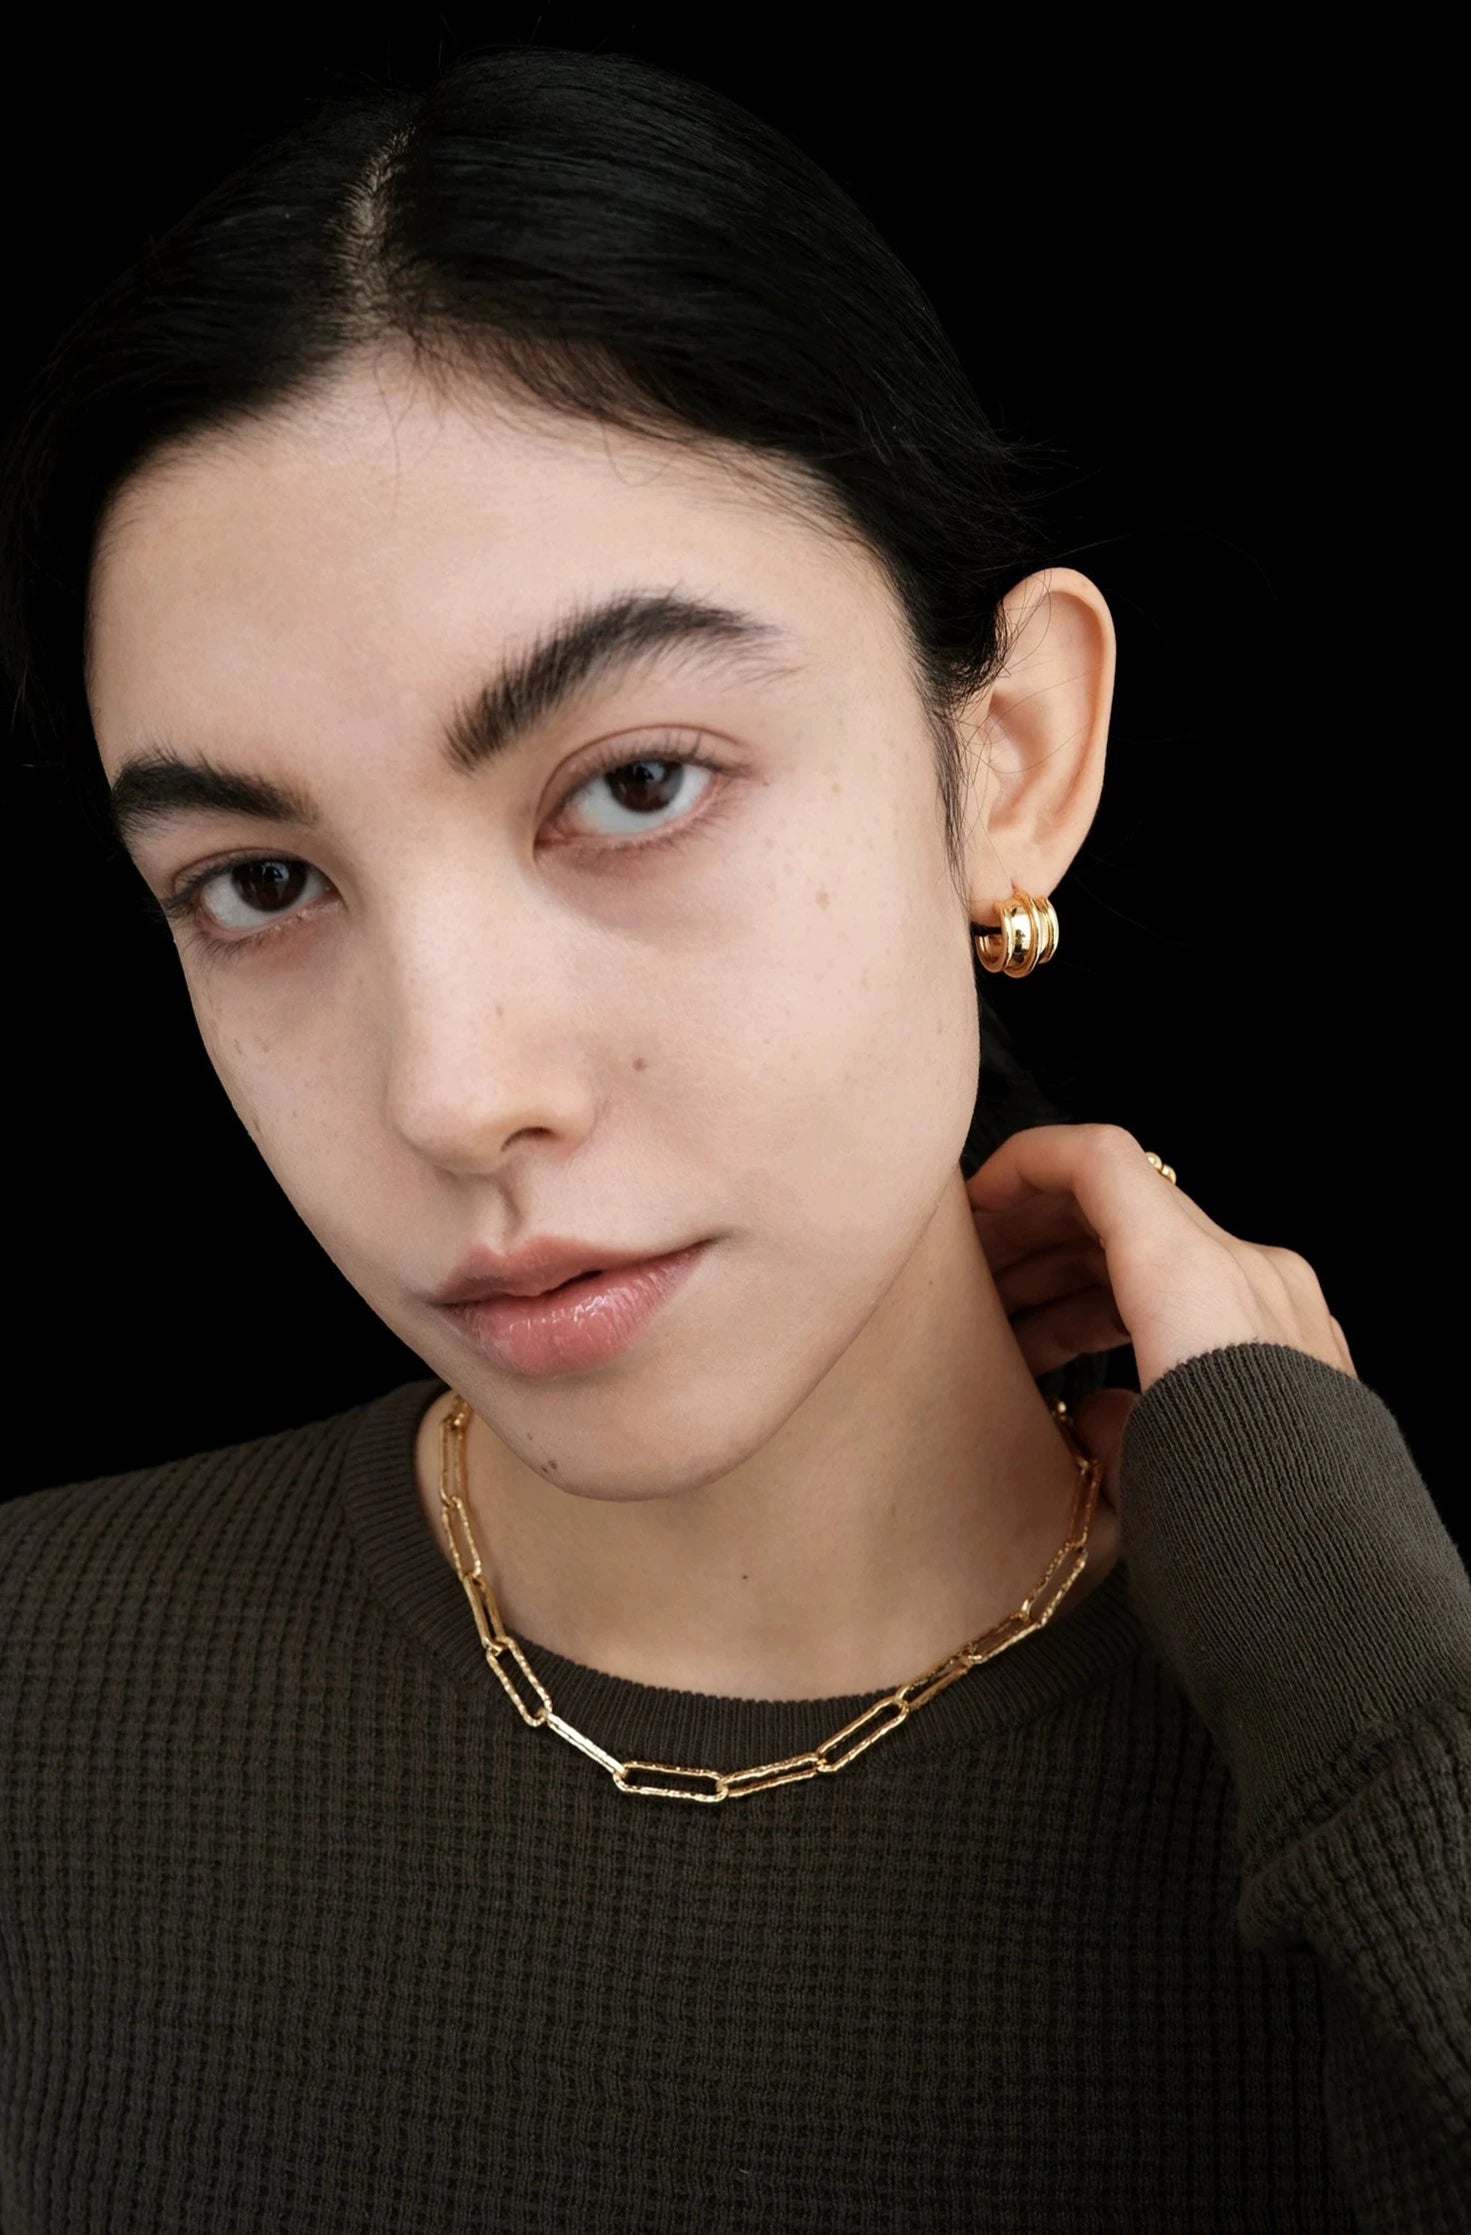 Martha Rib Stud Earrings Gold/Silver